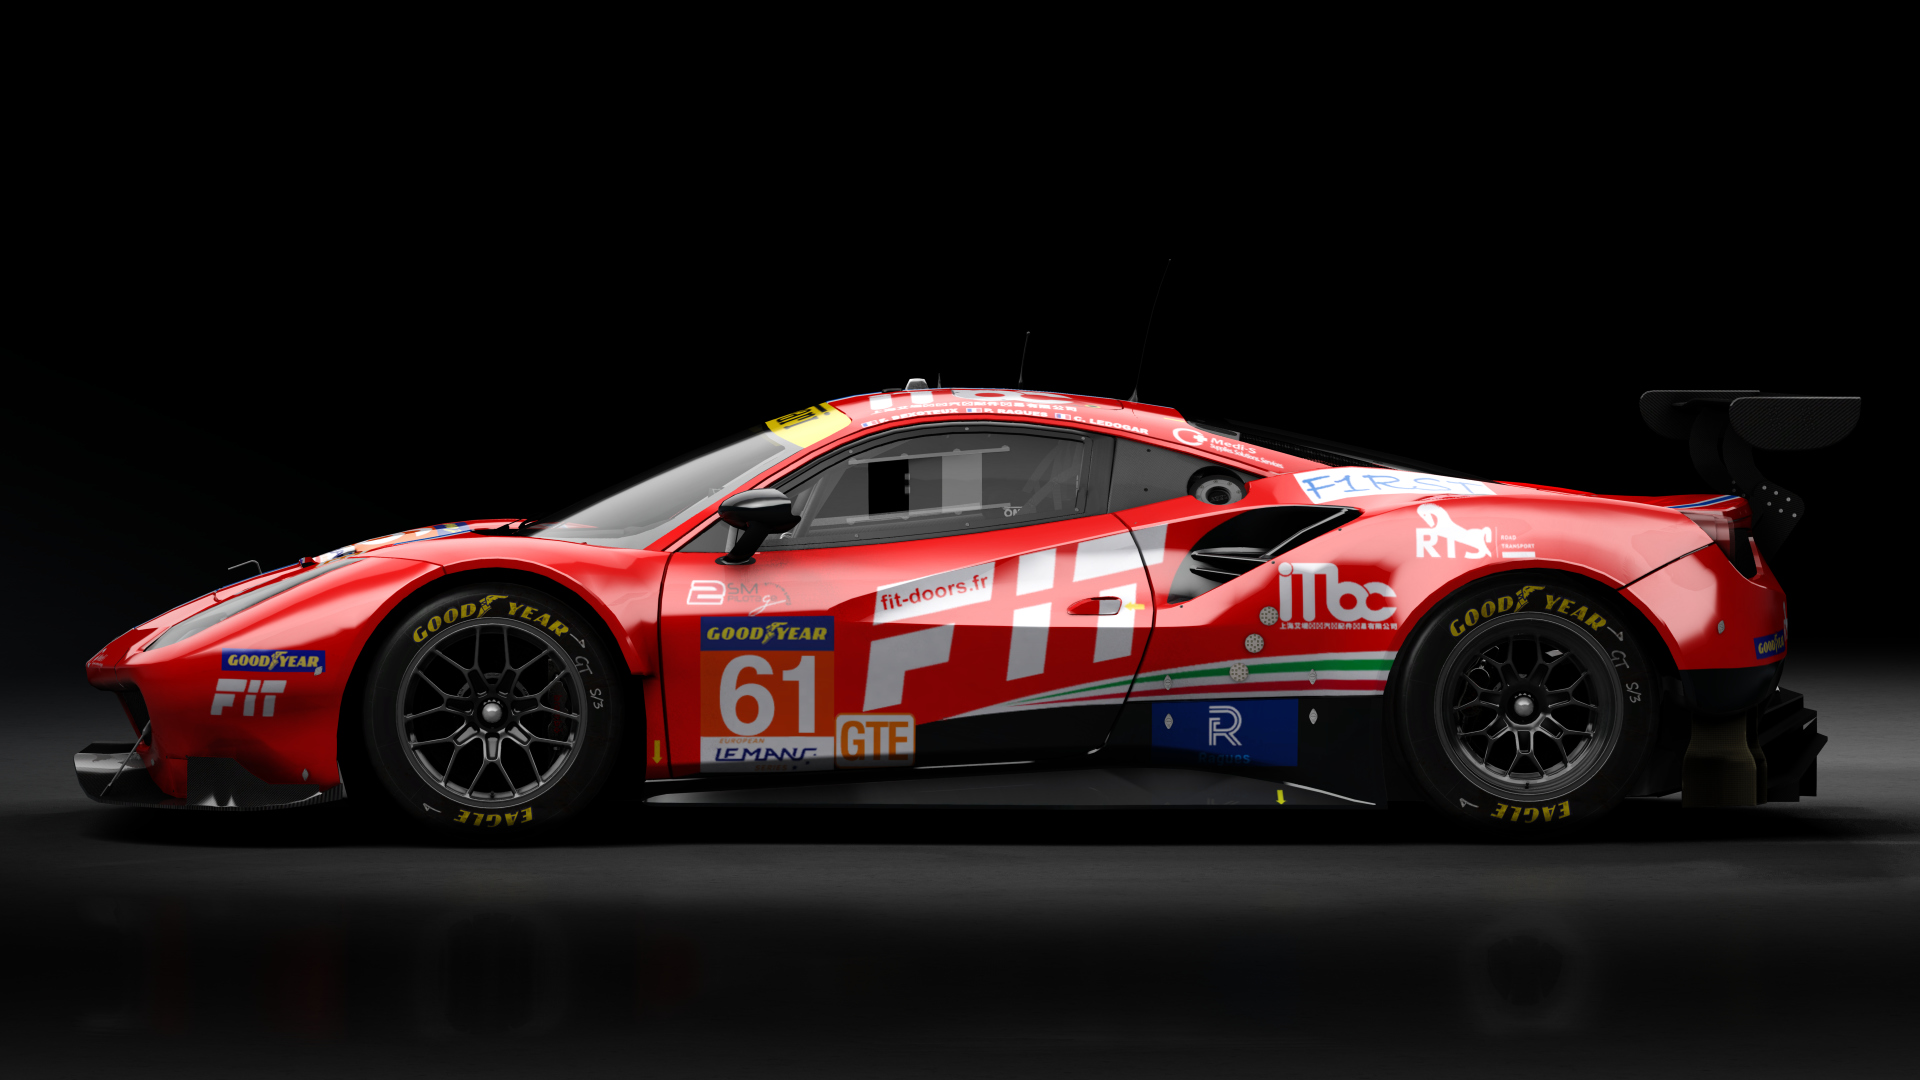 2018 Ferrari 488 GTE Evo [Michelotto], skin 2021 #61 AF Corse ELMS